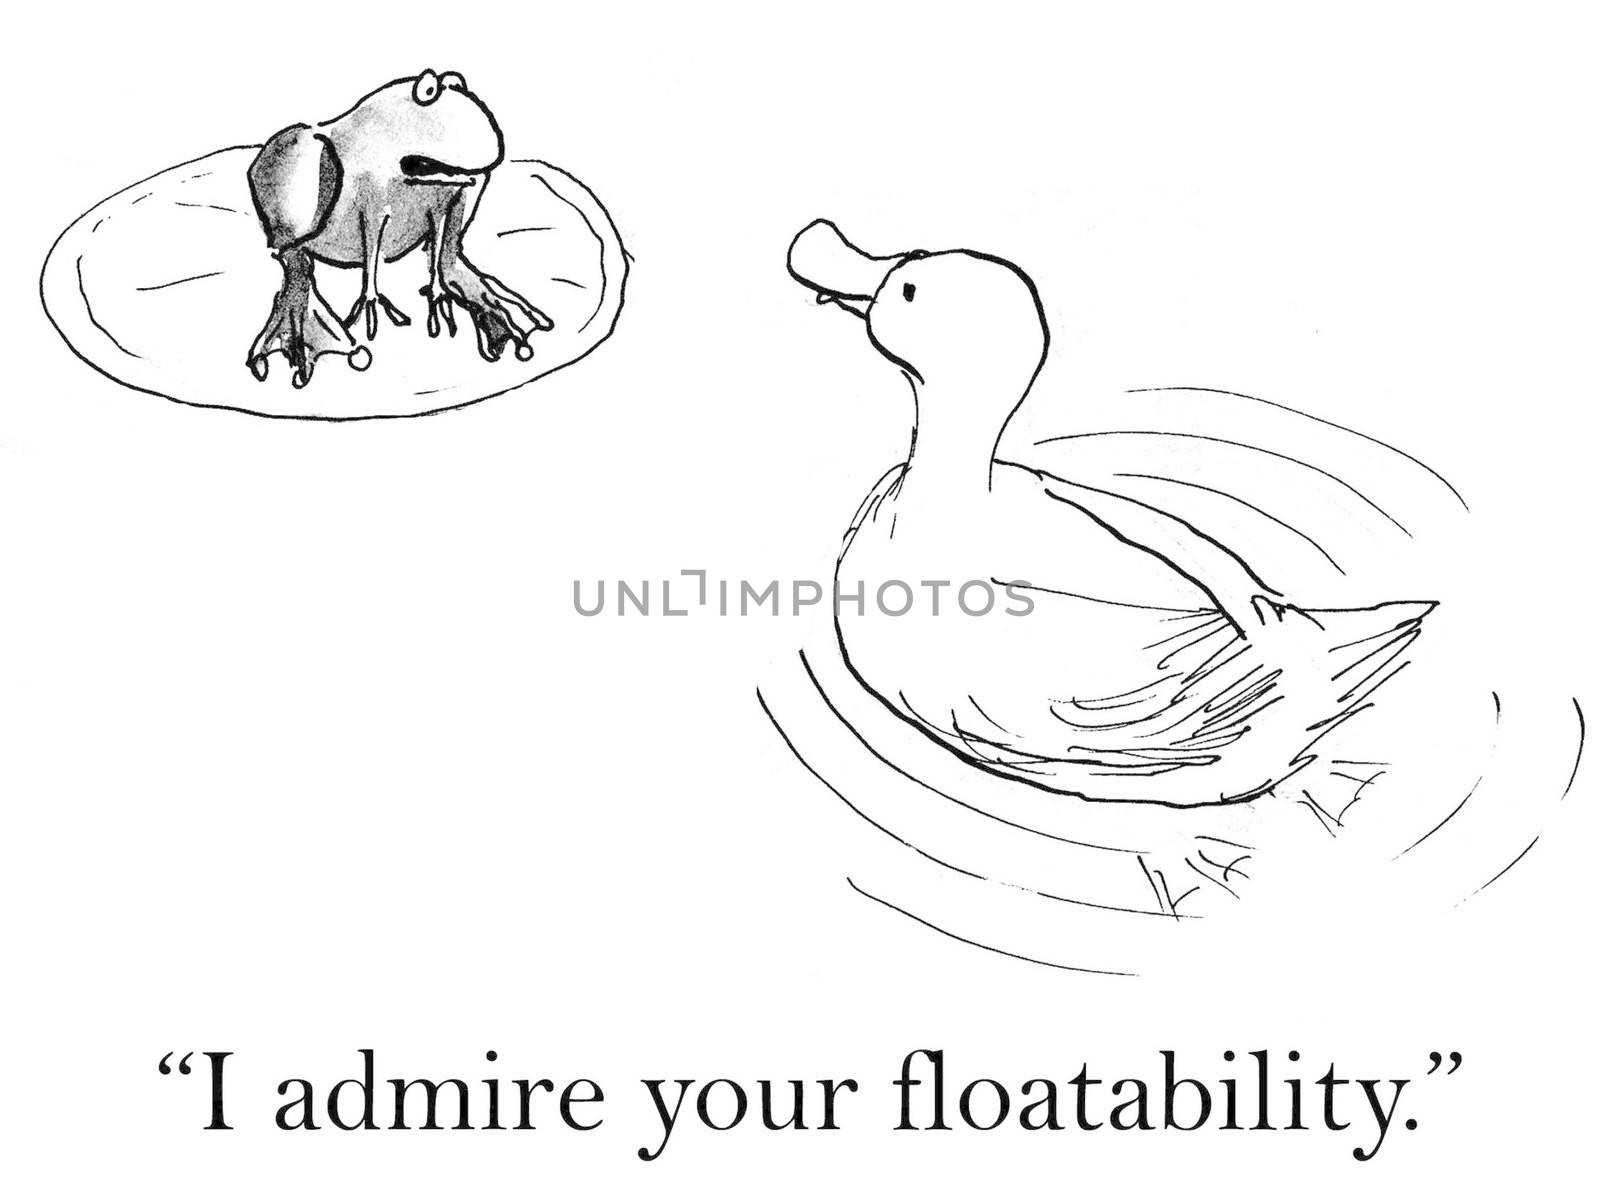 "I admire your floatability."